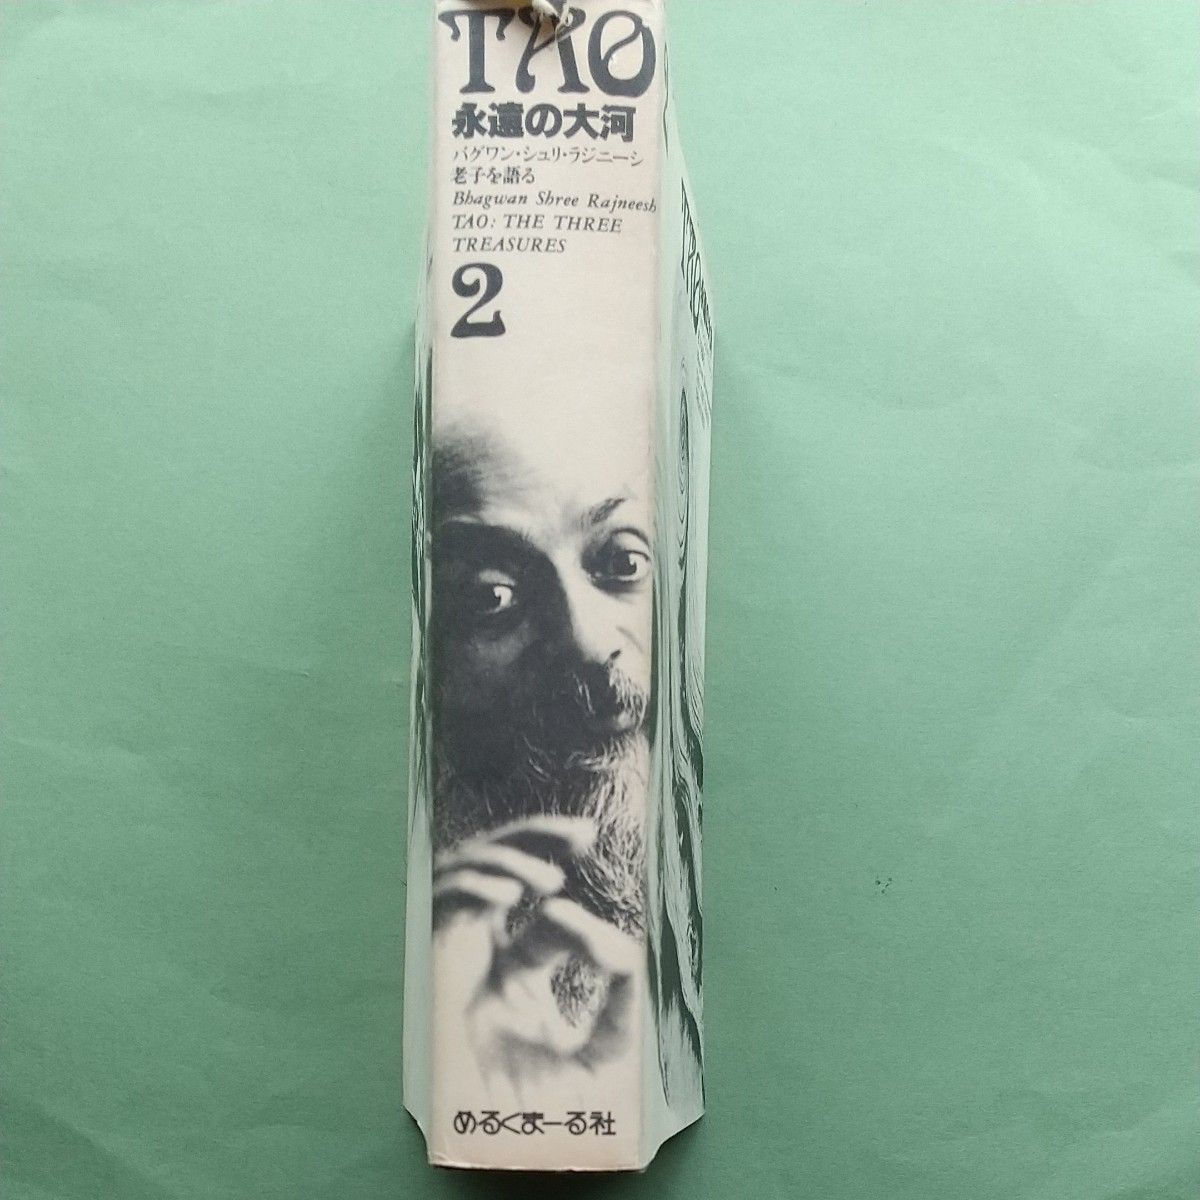 TAO 永遠の大河　バグワン・シュリ・ラジニーシ老子を語る　２　初版